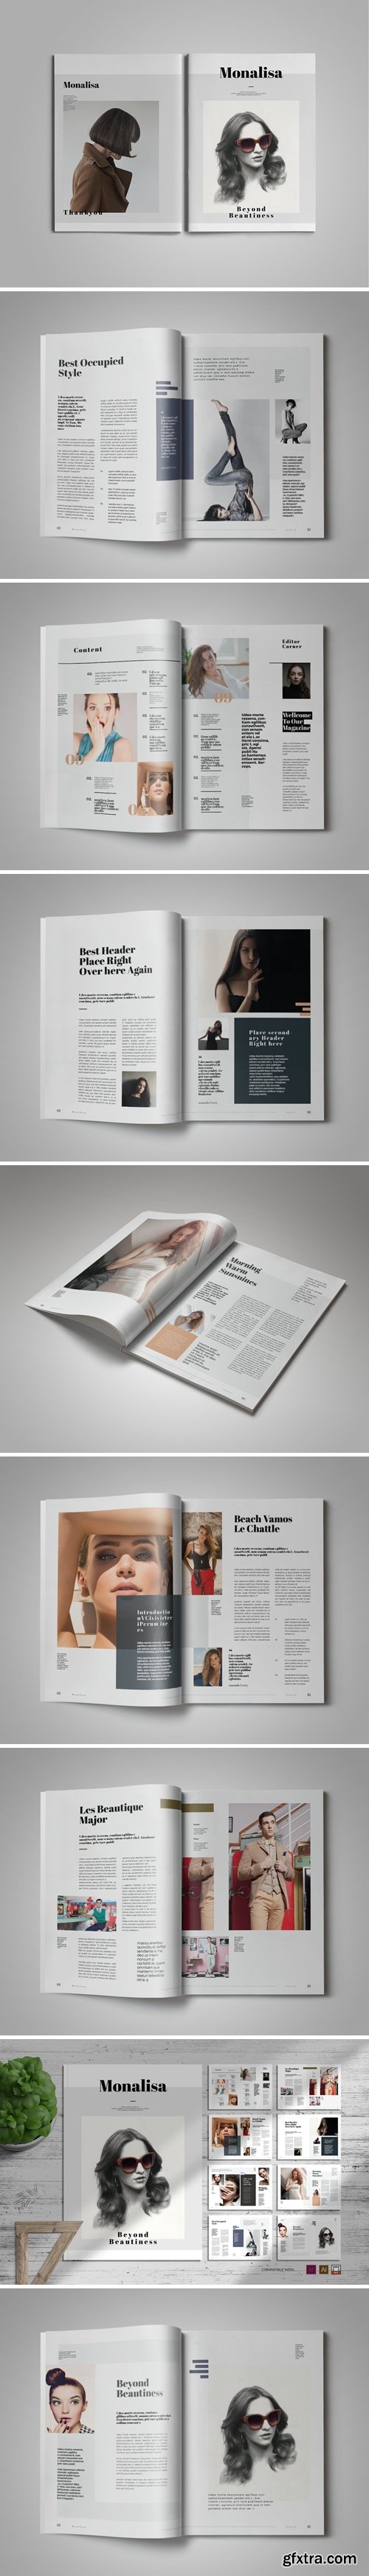 Monalisa | Magazine Template